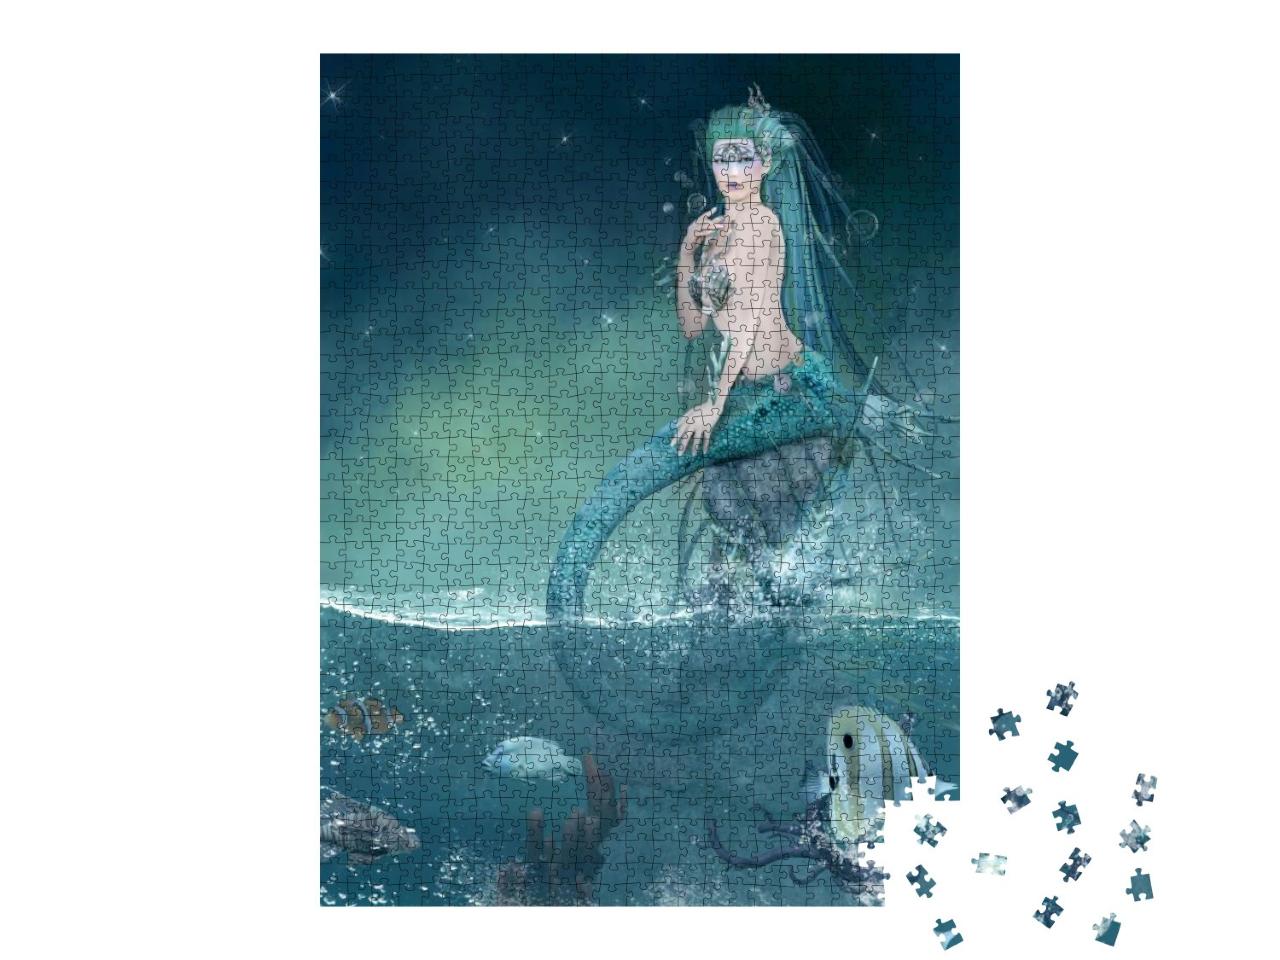 Puzzle 1000 Teile „Fantasy-Meerjungfrau auf einem Felsen“